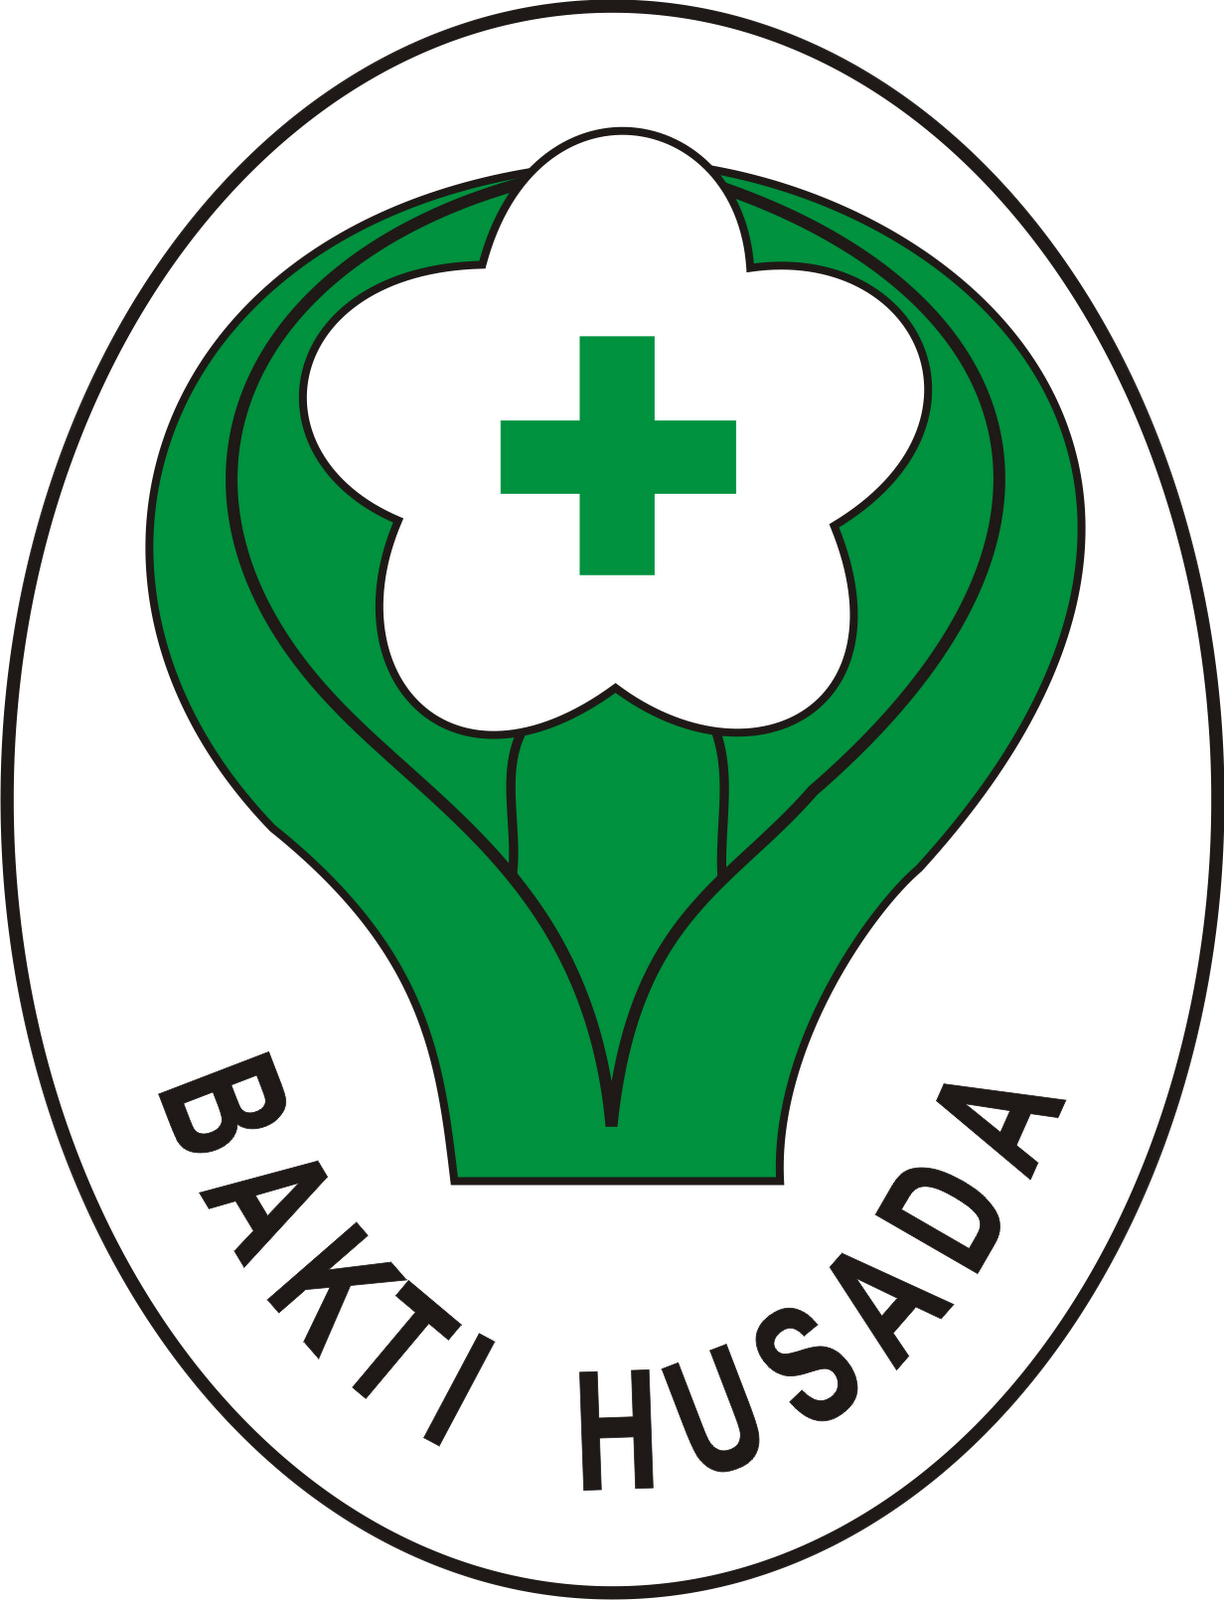 LOGO BAKTI  HUSADA  Gambar Logo